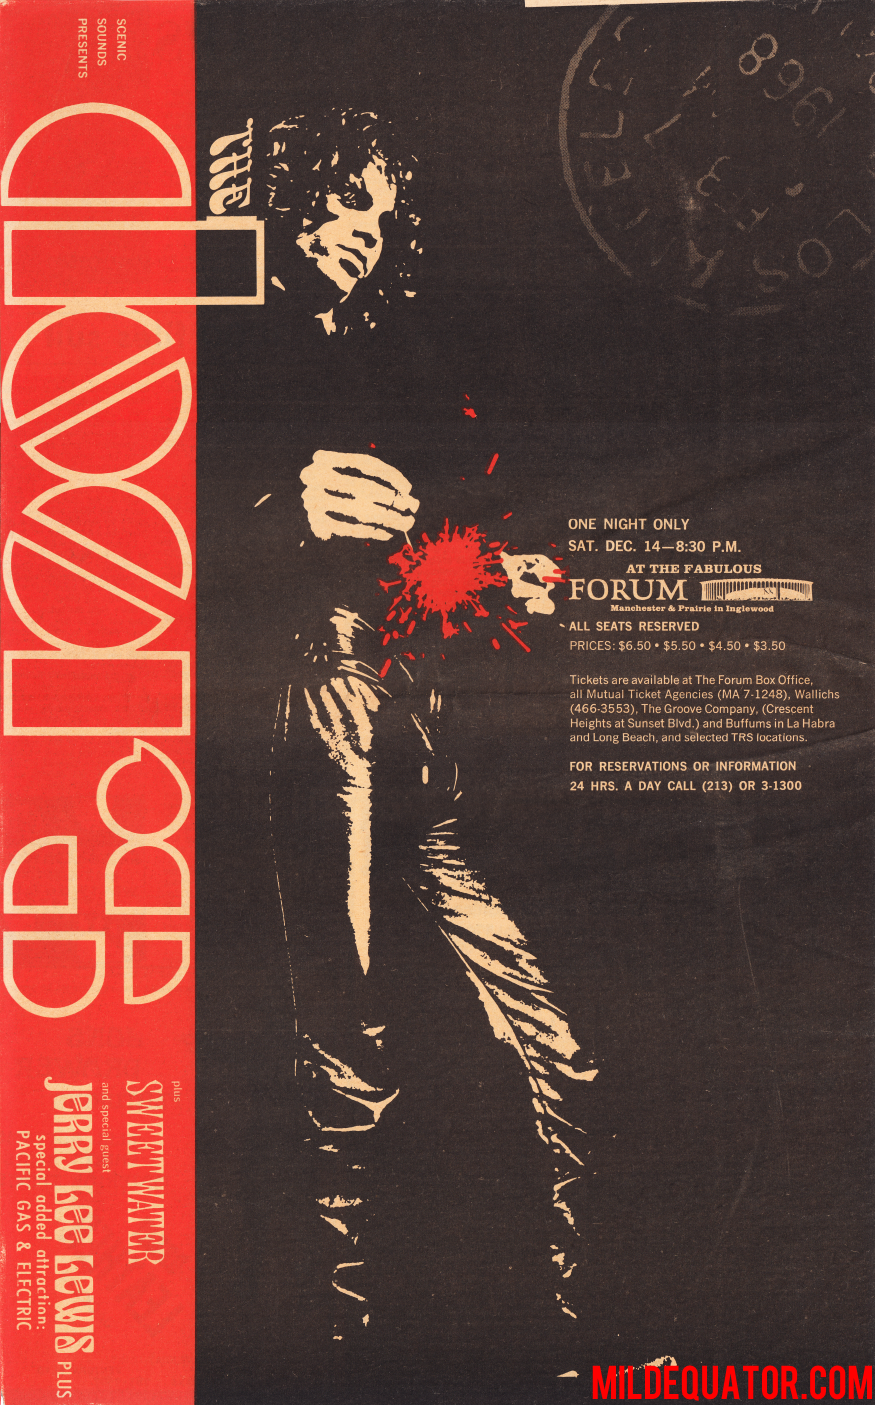 The Doors - L.A. Forum 1968 - Poster Ad